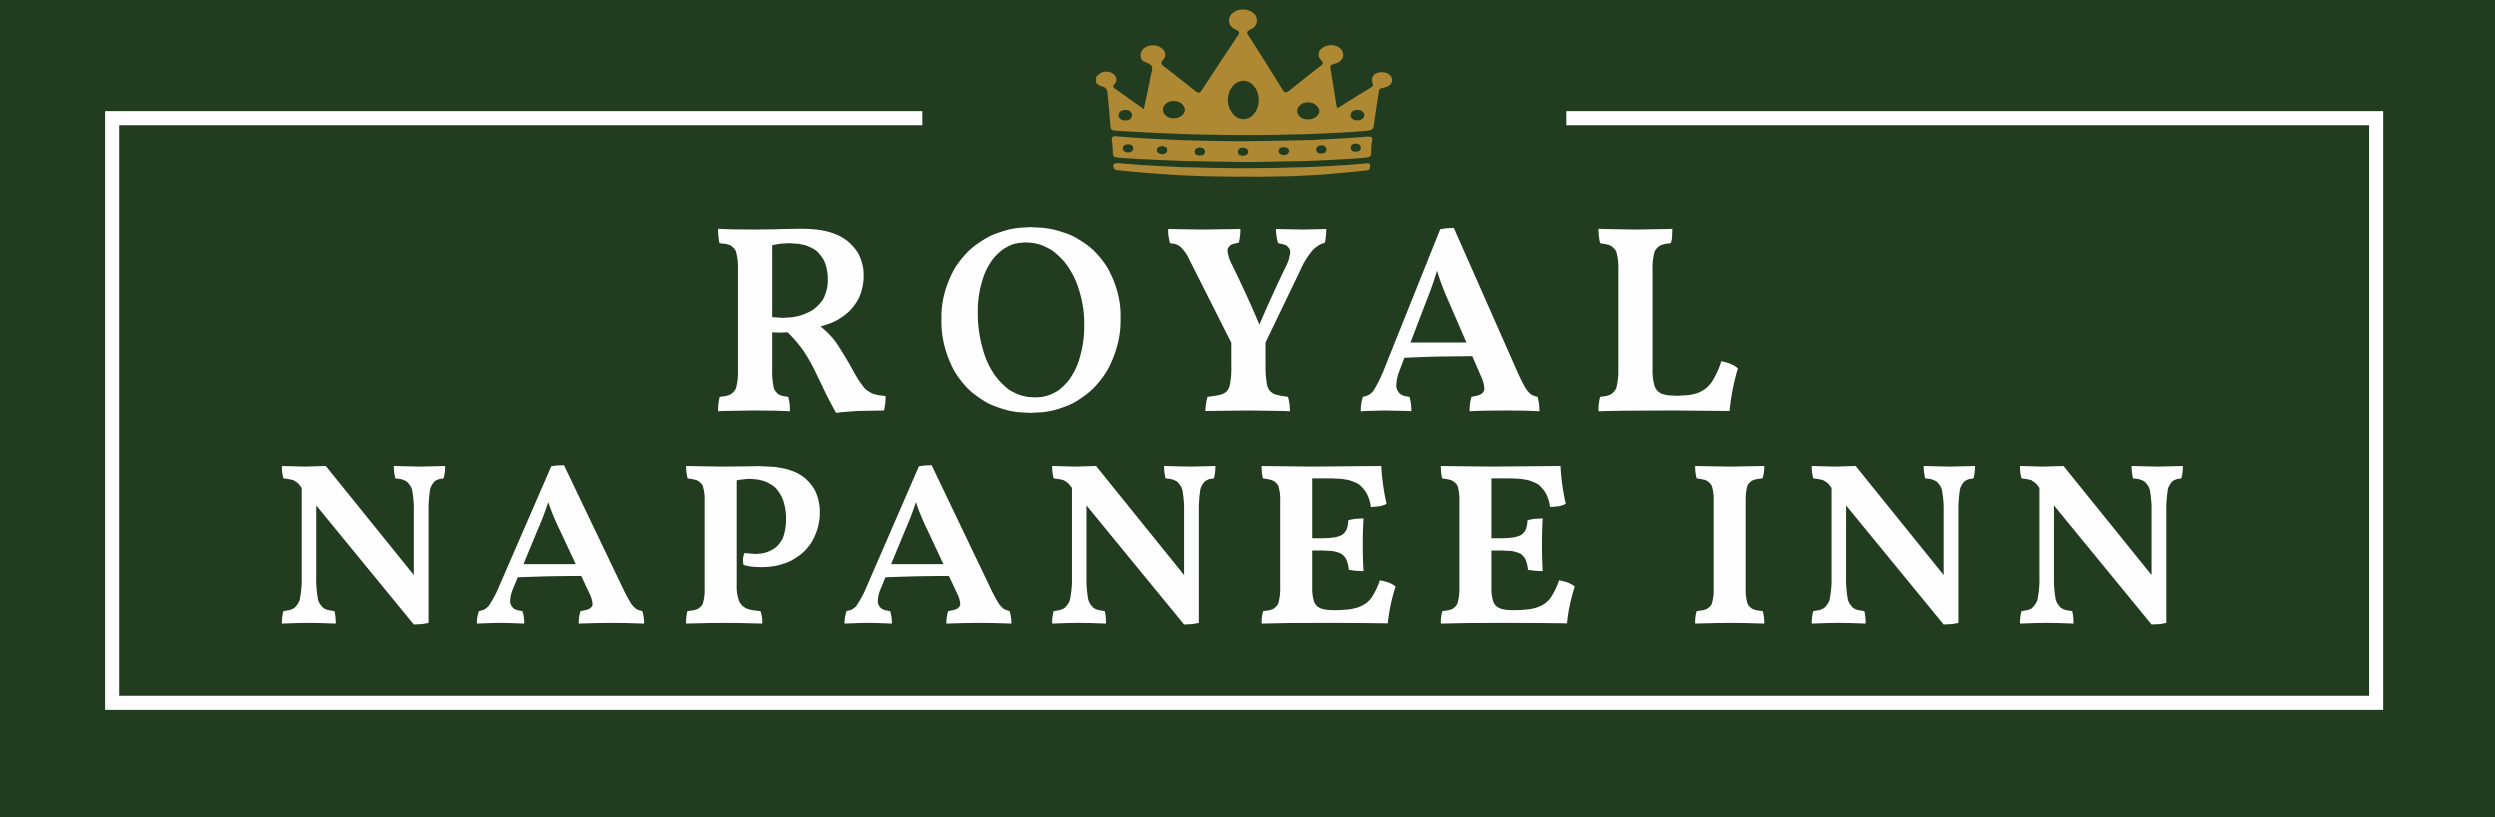  Royal Napanee Inn